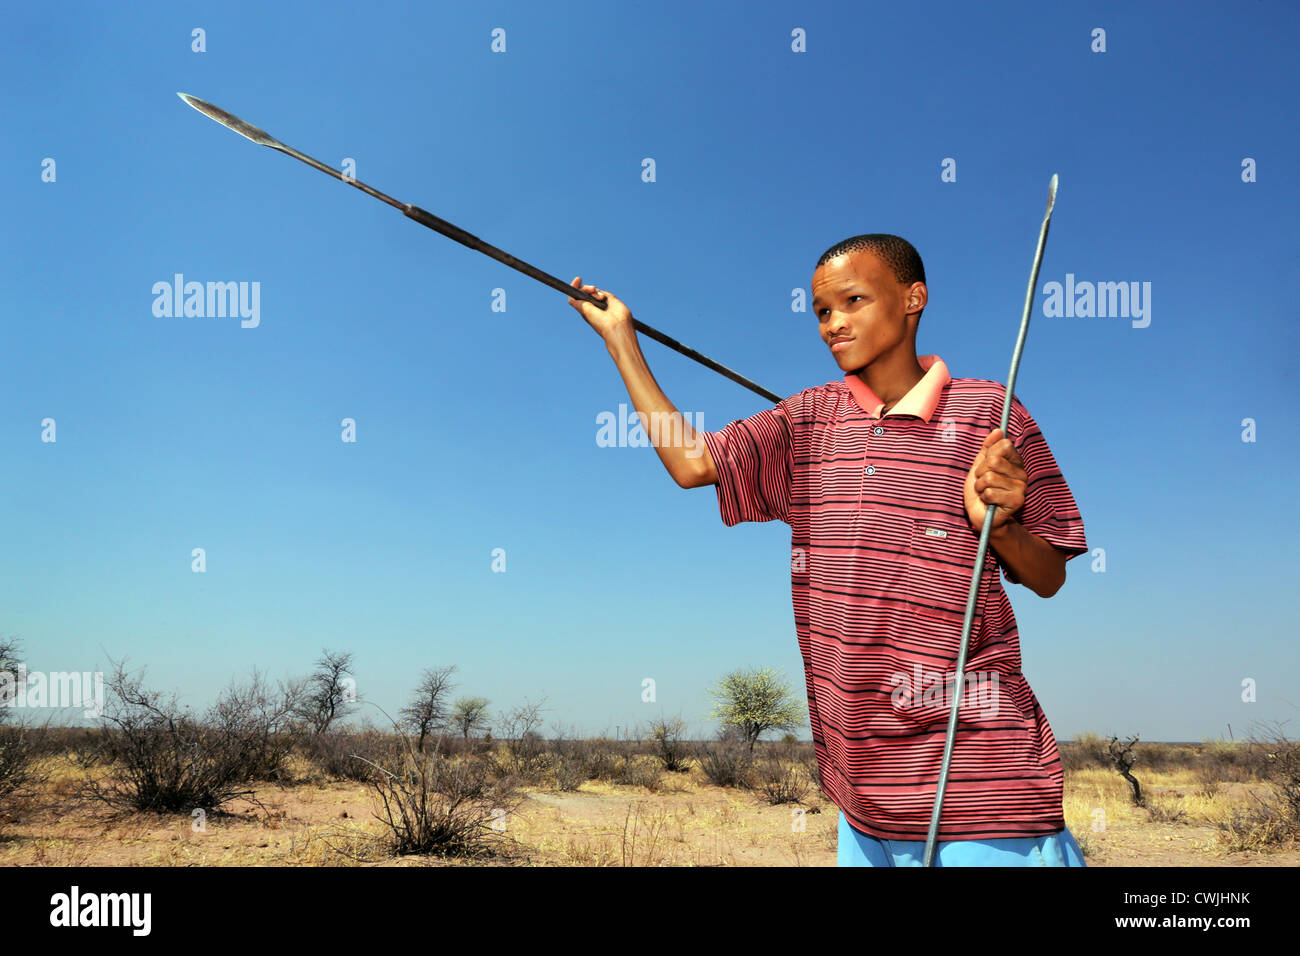 Boy of the indigenous San tribe throws a spear, Namibia, Kalahari desert Stock Photo